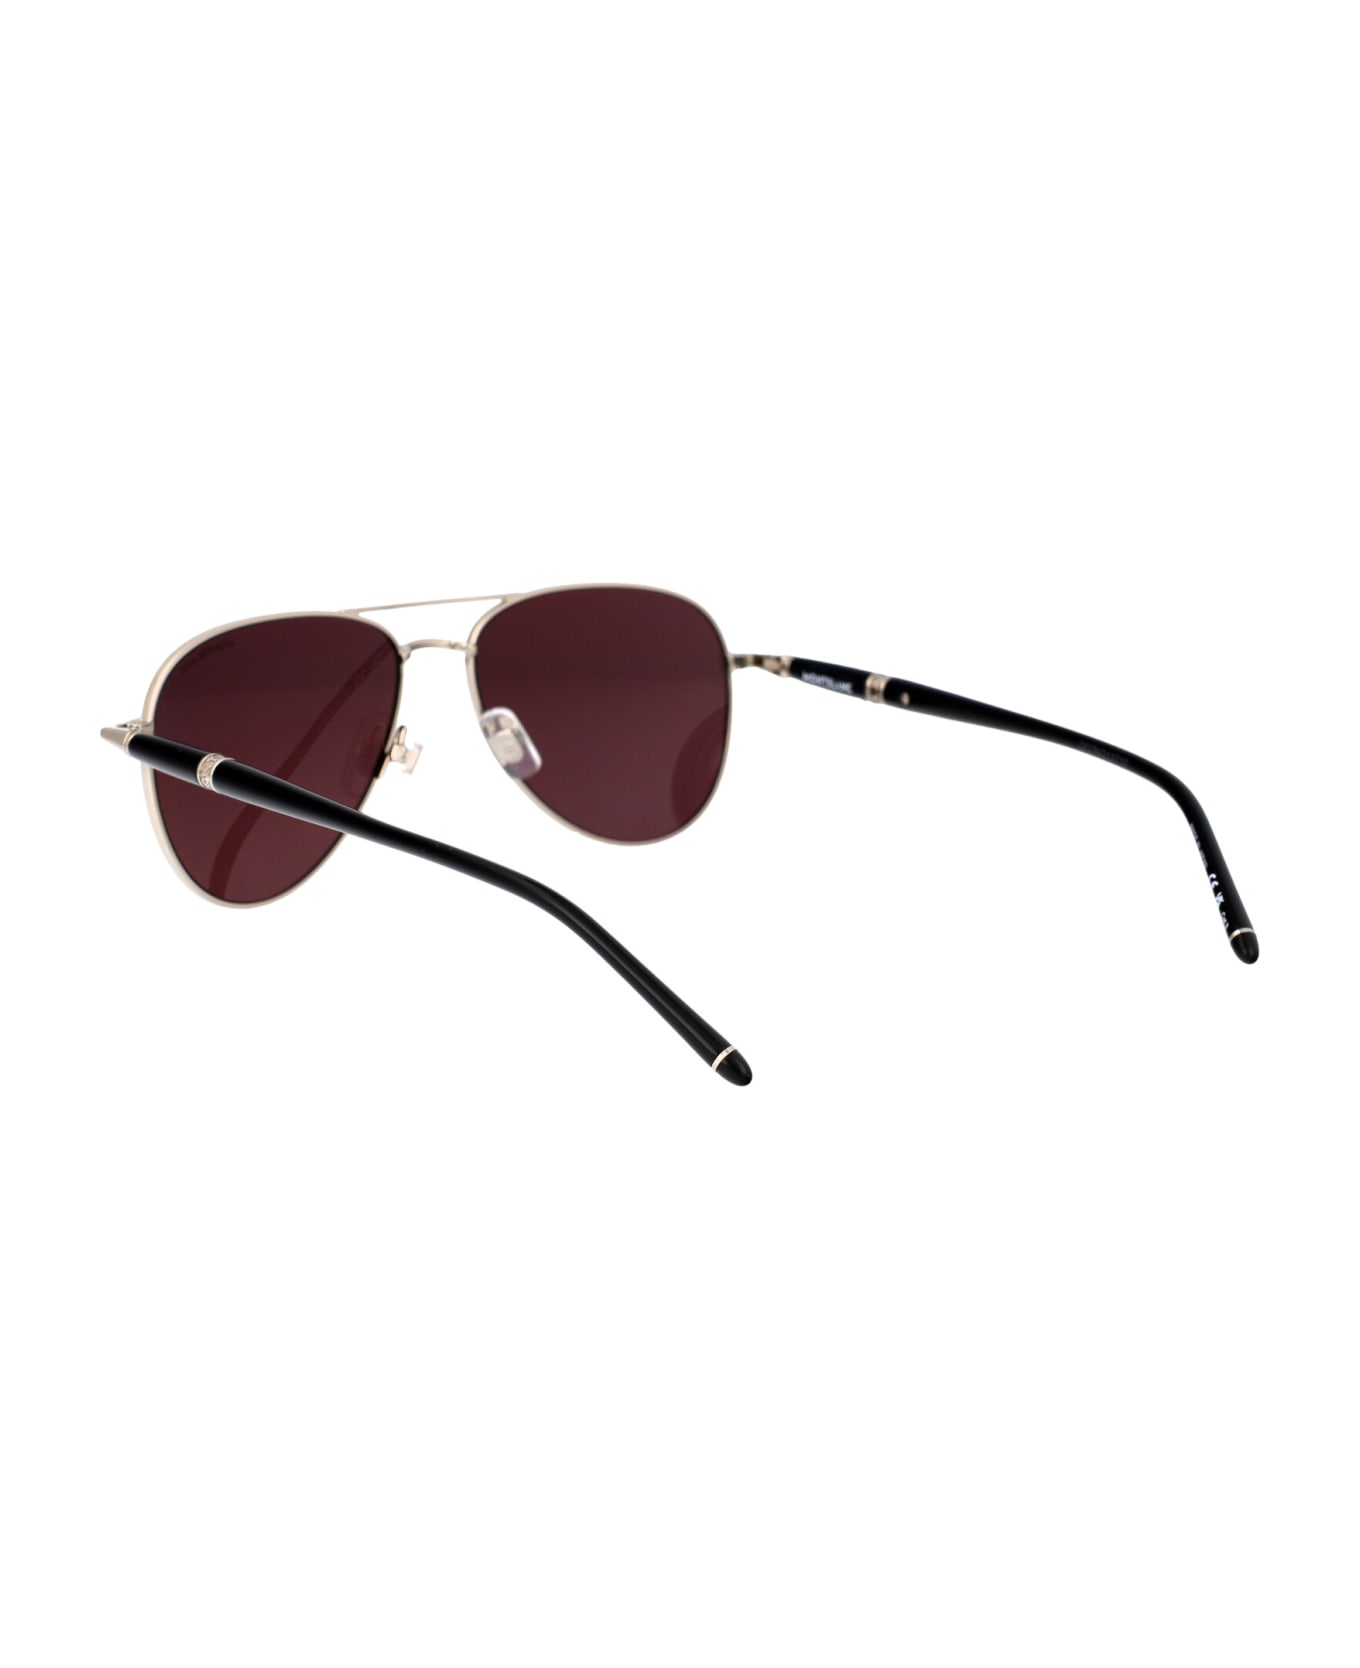 Montblanc Mb0345s Sunglasses - 002 SILVER BLACK VIOLET